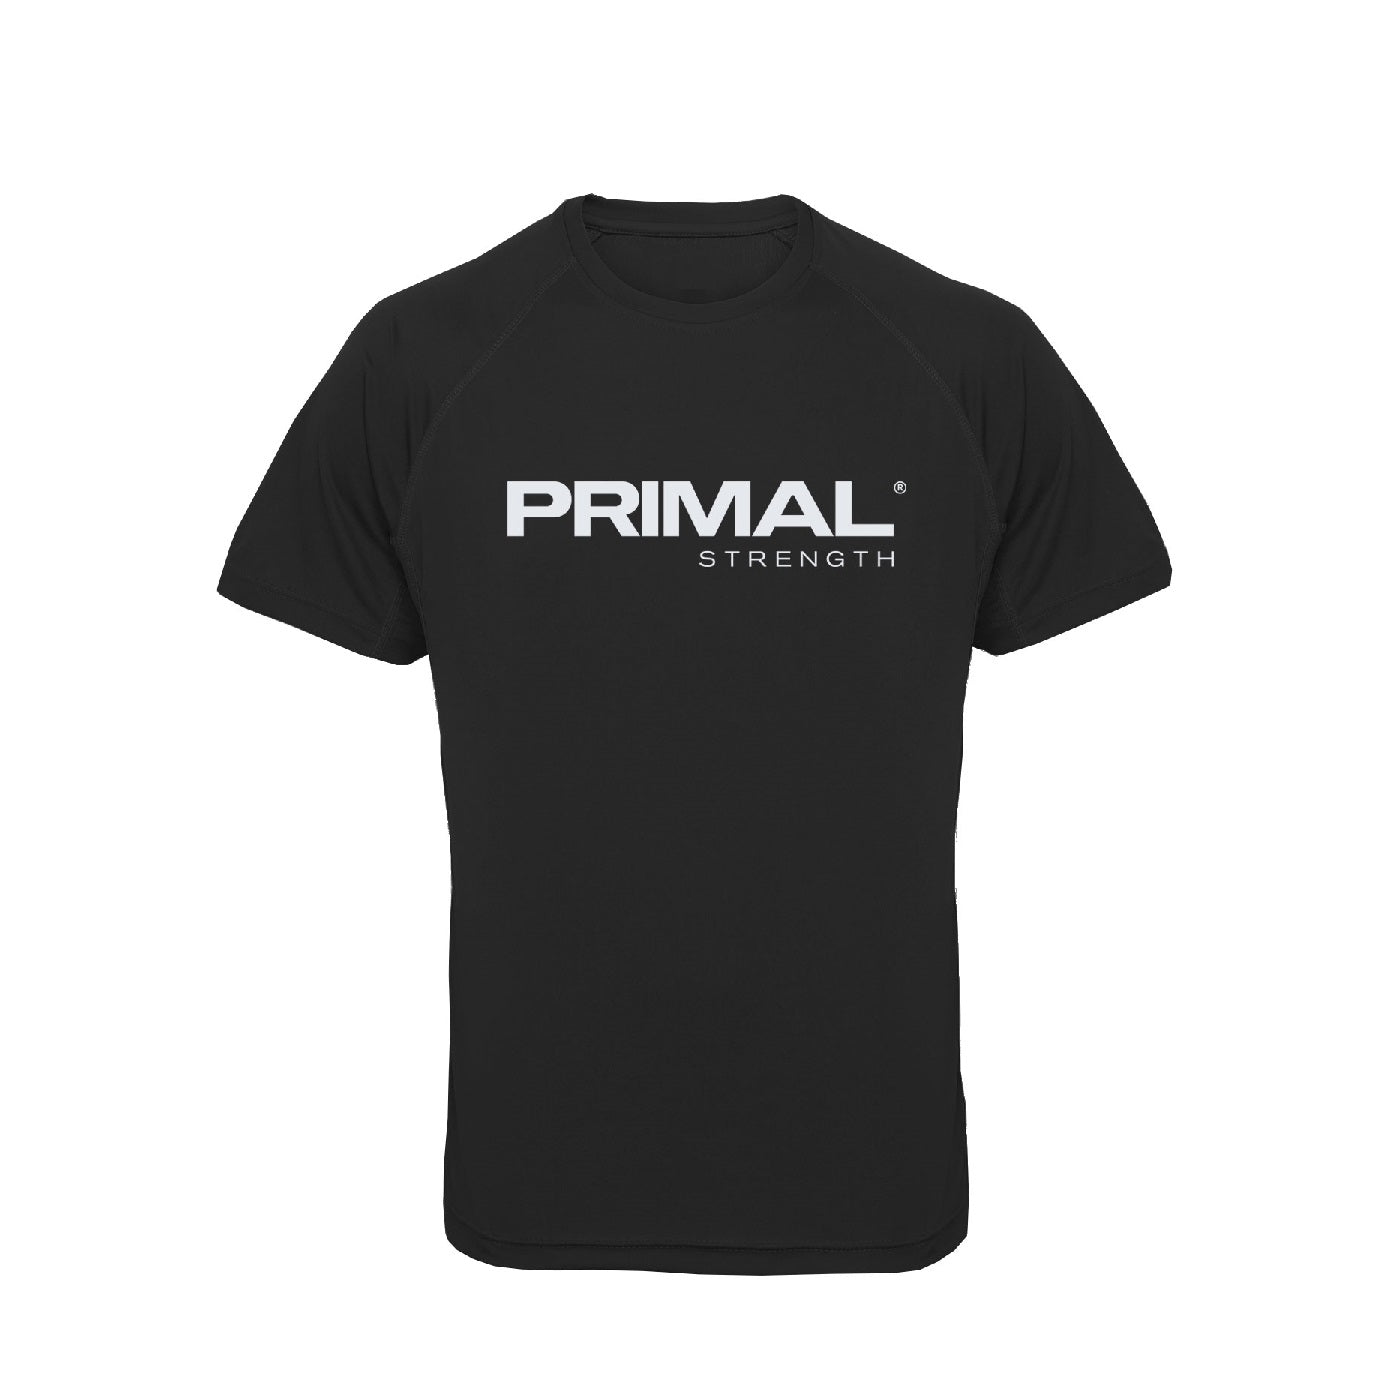 Primal Men's Technical Performance T-Shirt - Black